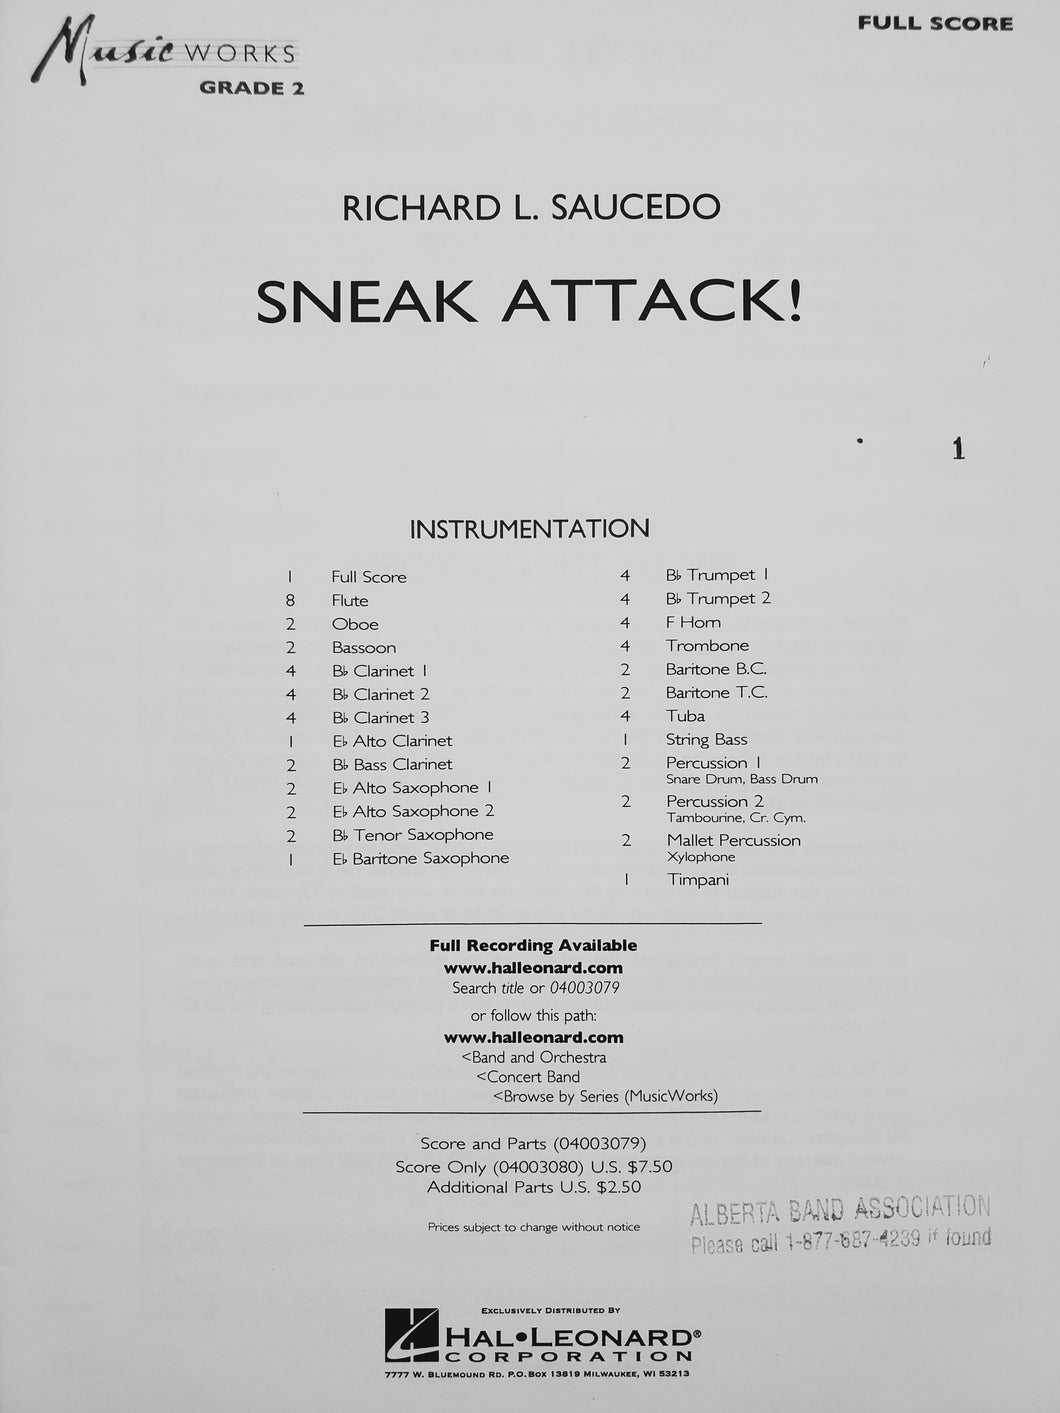 Sneak Attack! Richard L. Saucedo